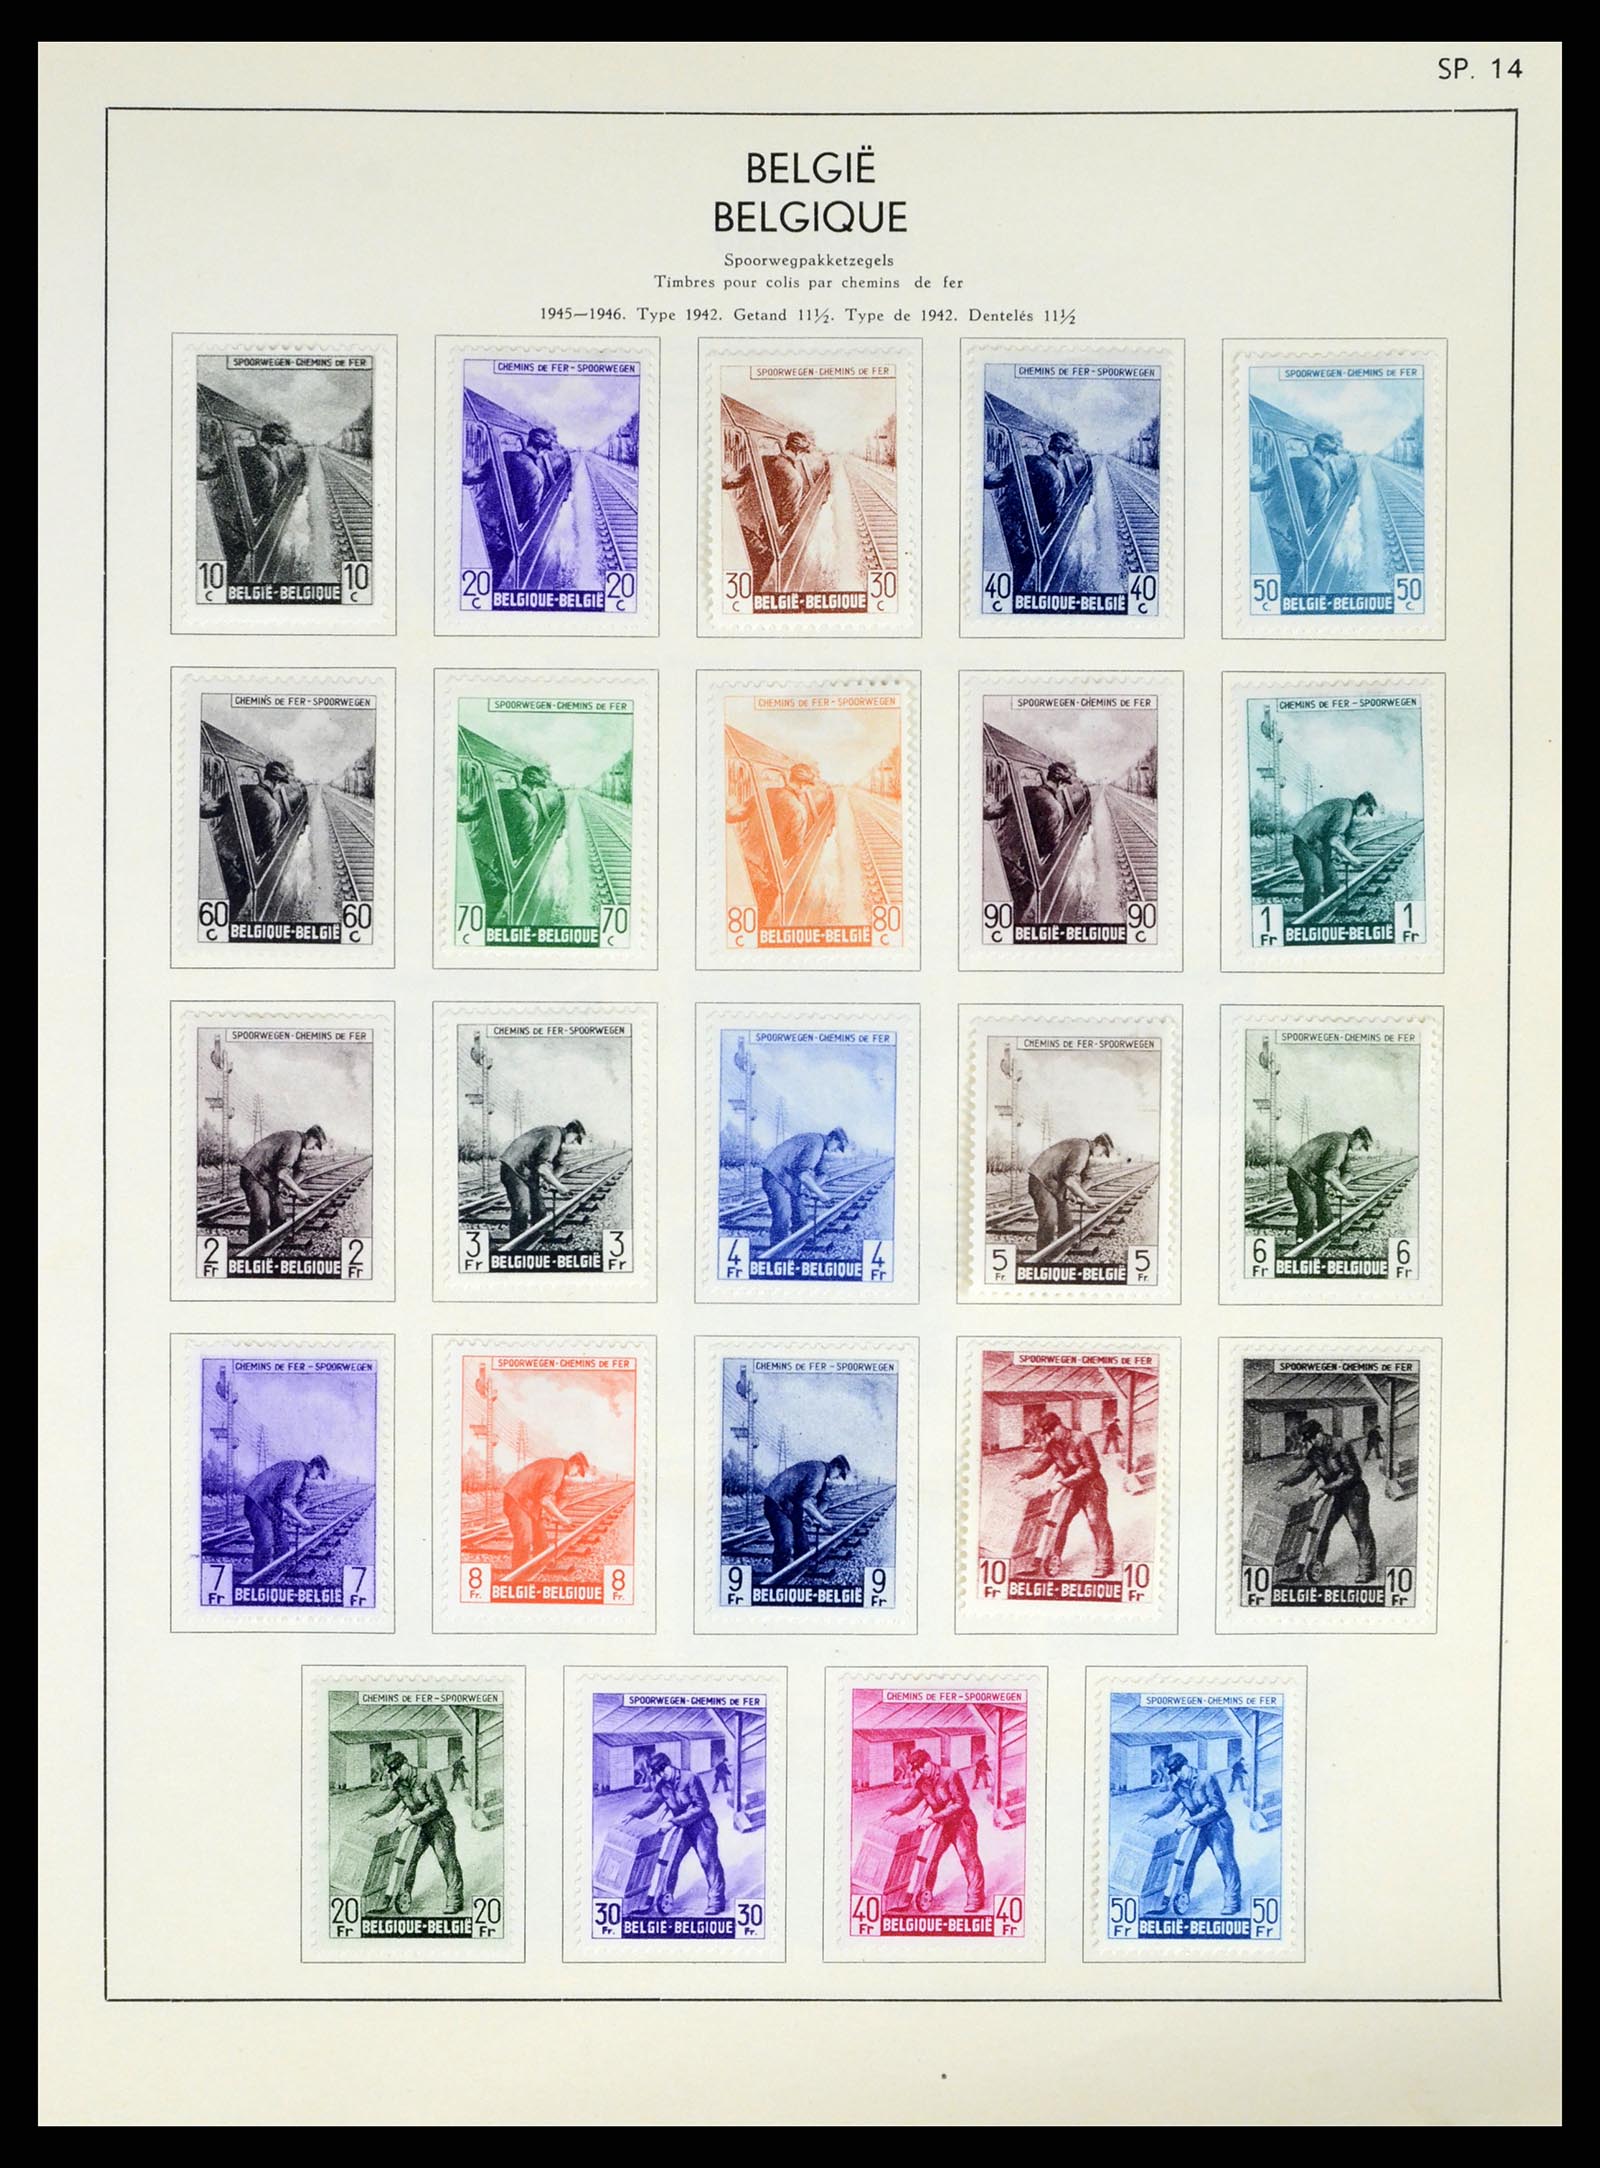 37959 147 - Stamp Collection 37959 Belgium and Belgian Congo 1849-1960.